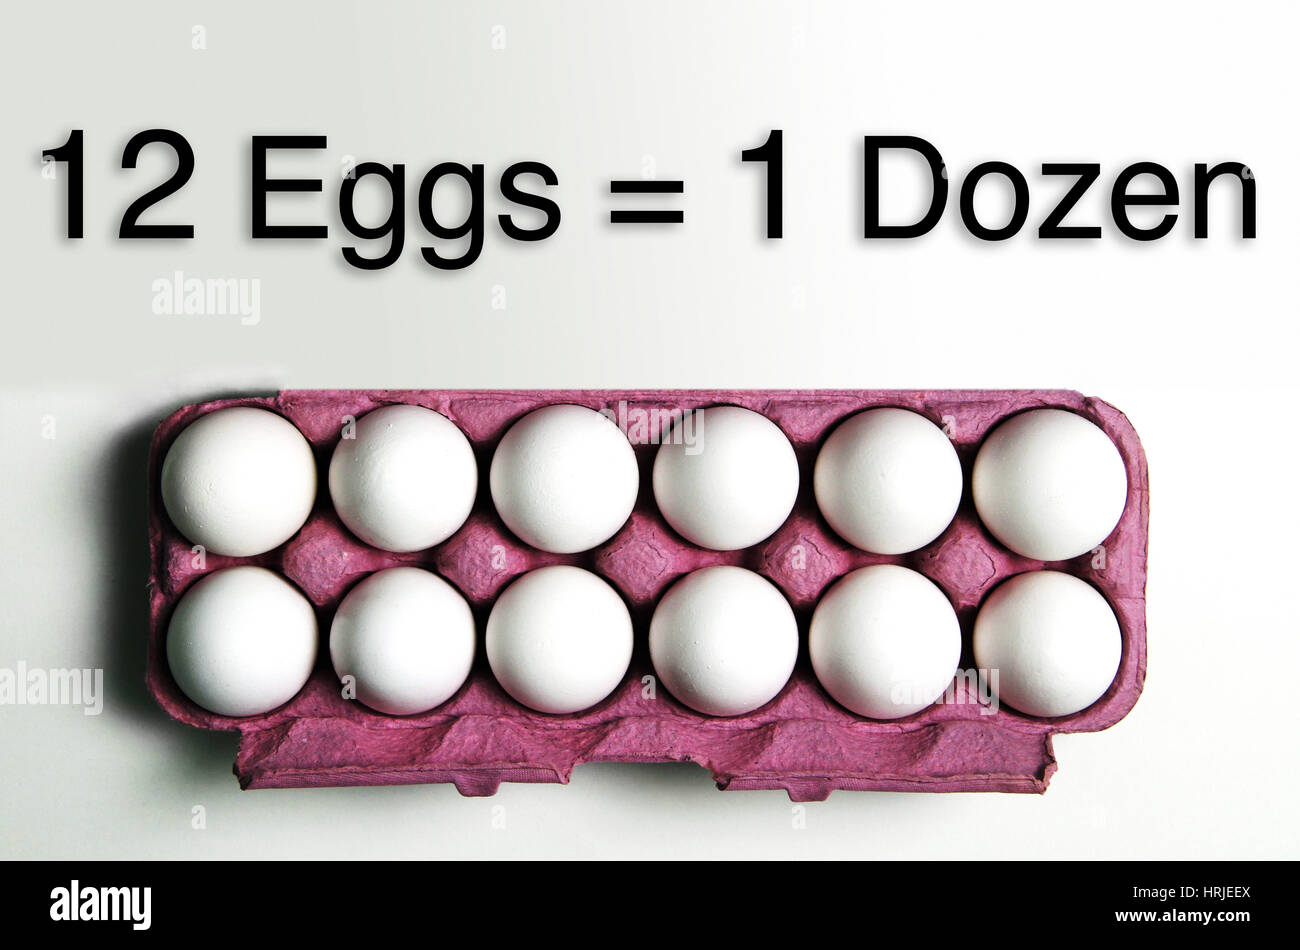 one-dozen-=-12-eggs-HRJEEX.jpg